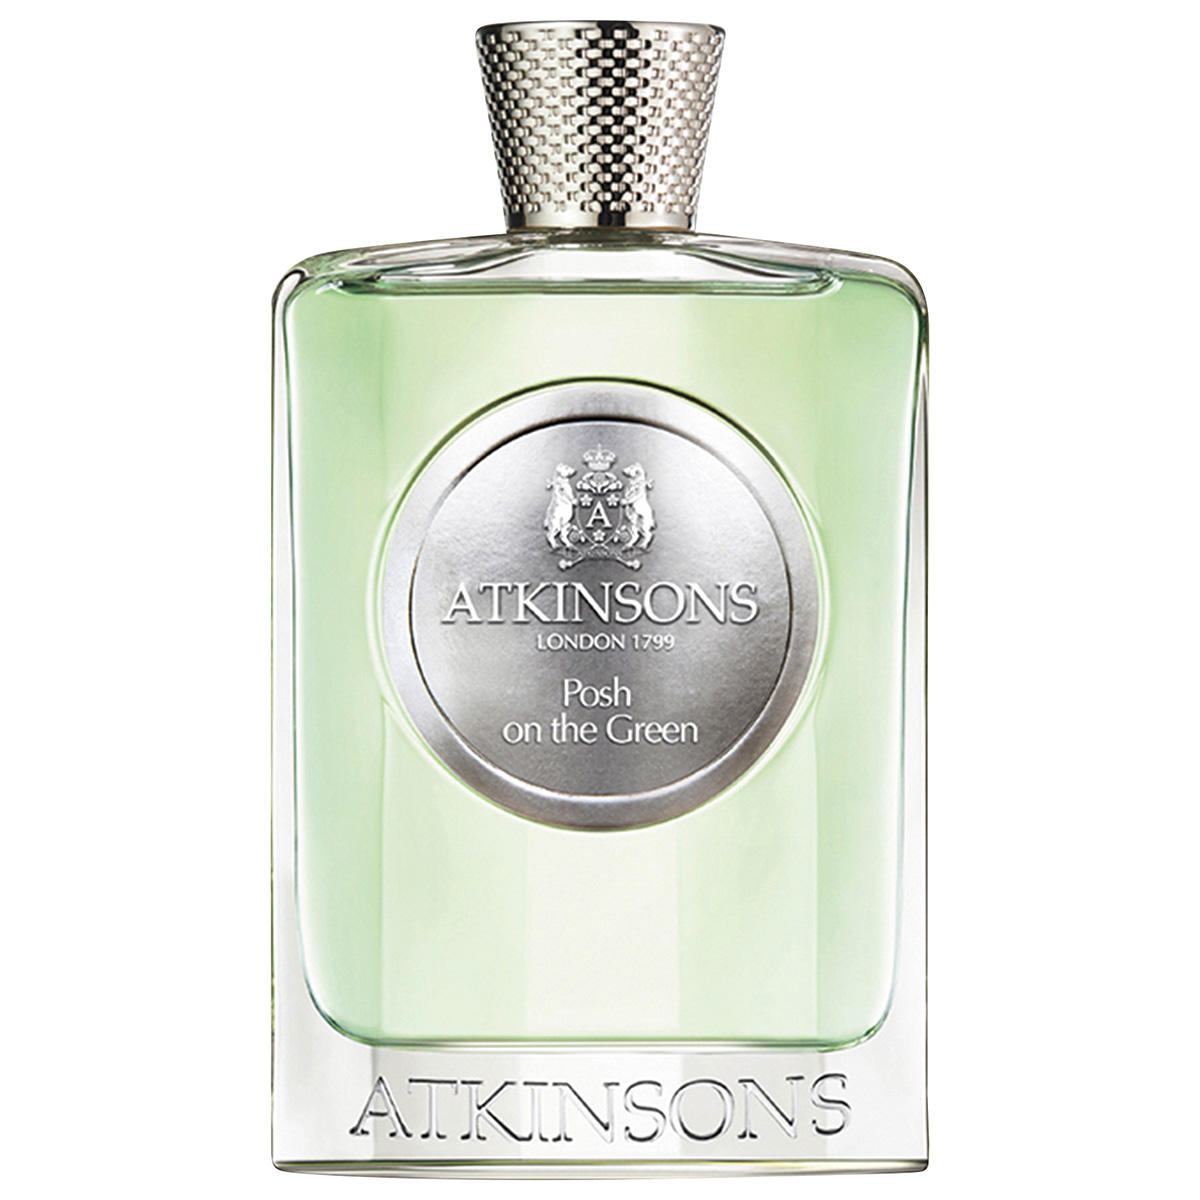 atkinsons posh on the green eau de parfum 100 ml